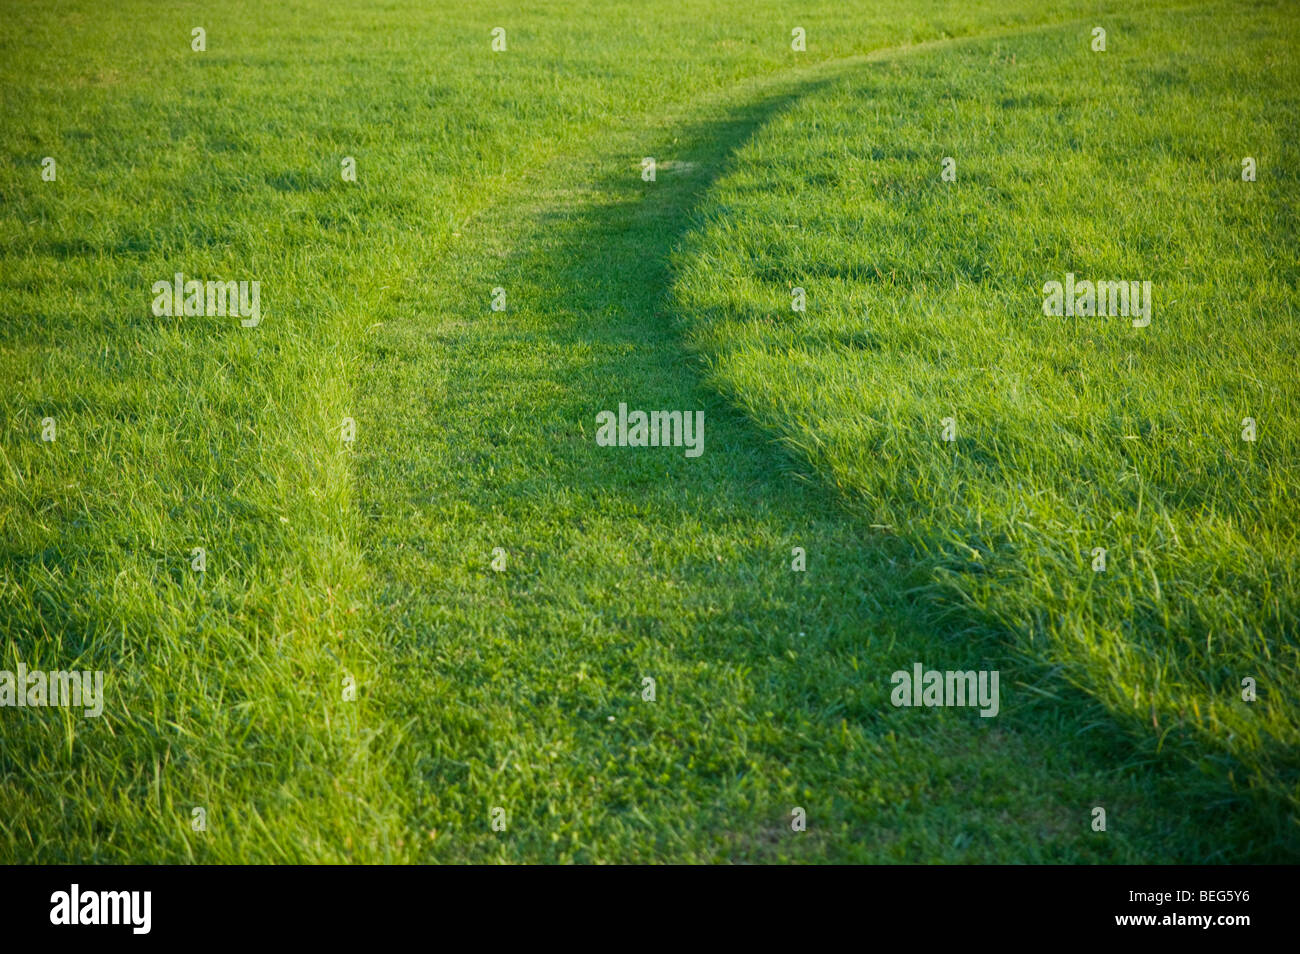 Walking path mowed through a green field in a park Stock Photo